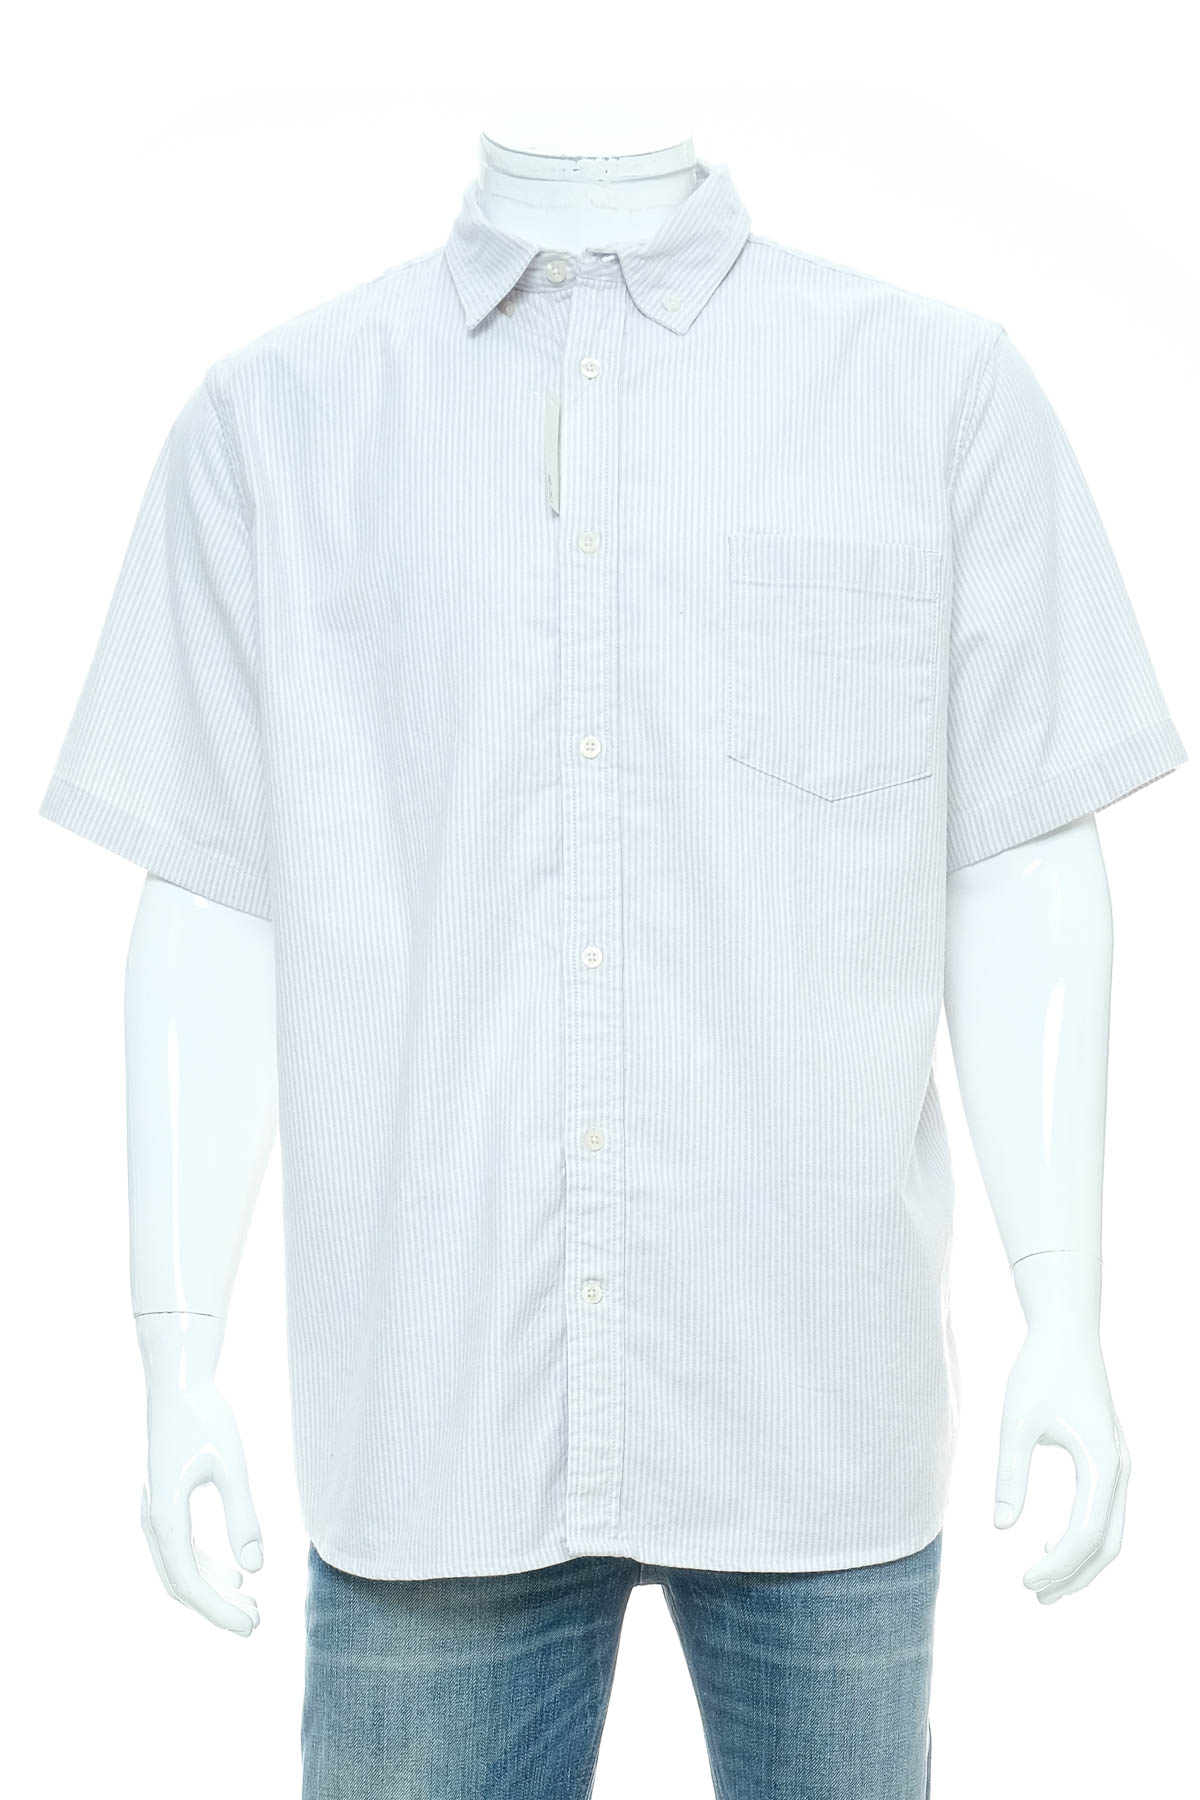 Men's shirt - Amazon Essentials - 0